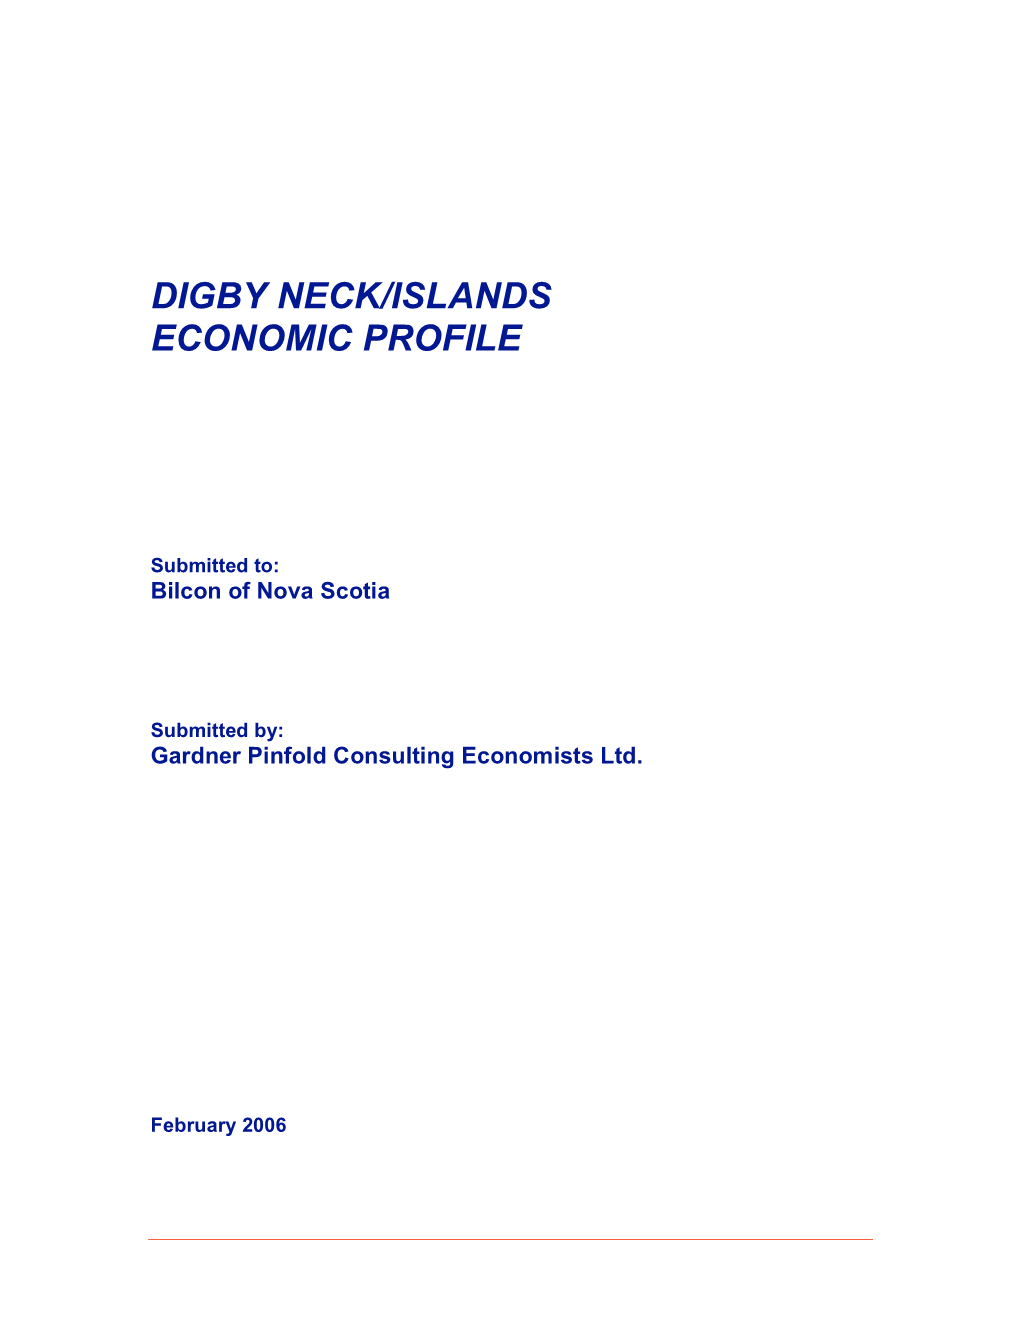 Digby Neck/Islands Economic Profile